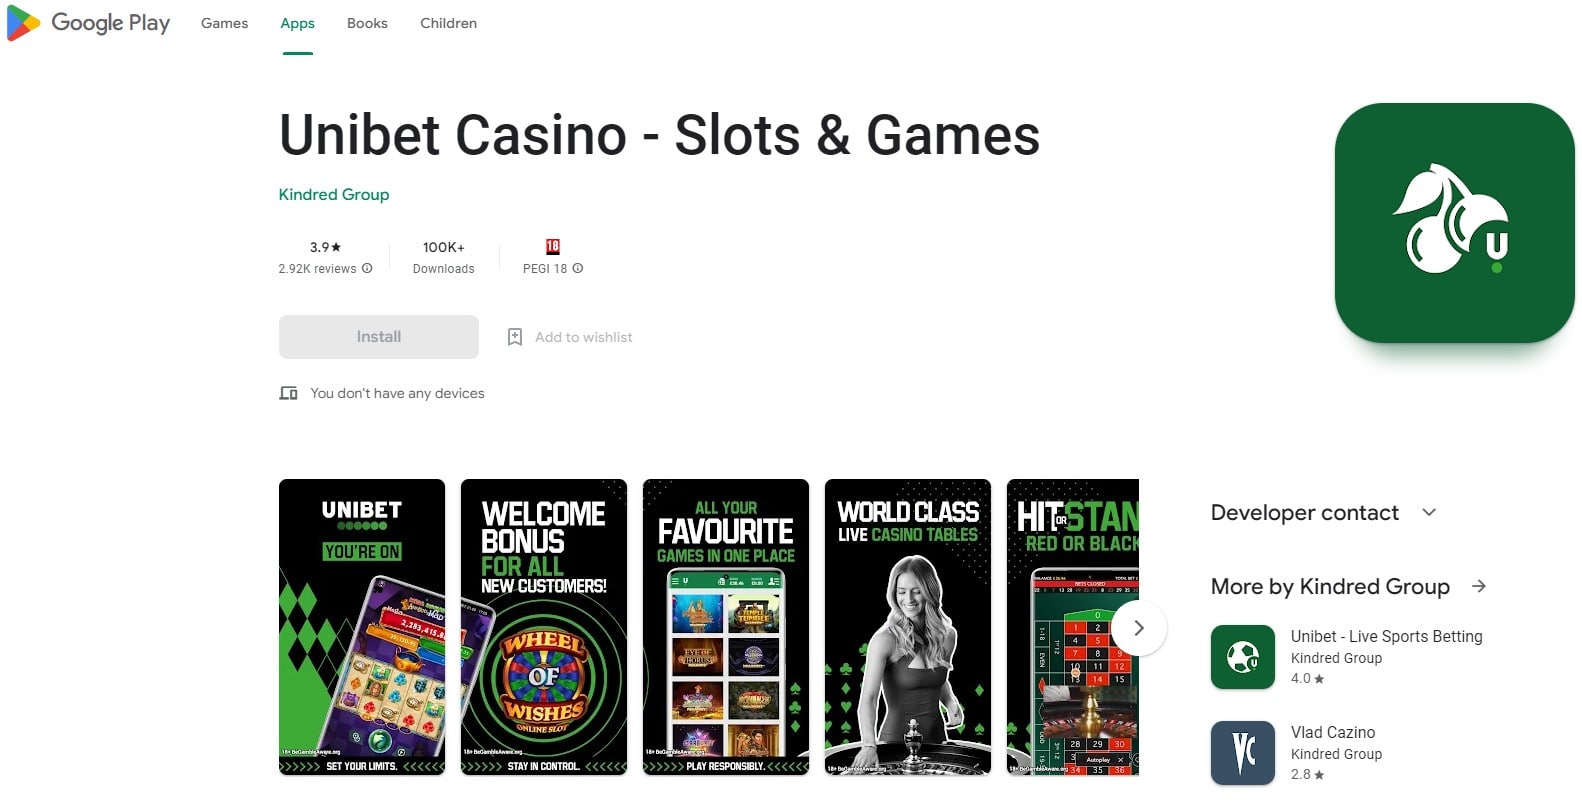 unibet casino on google play